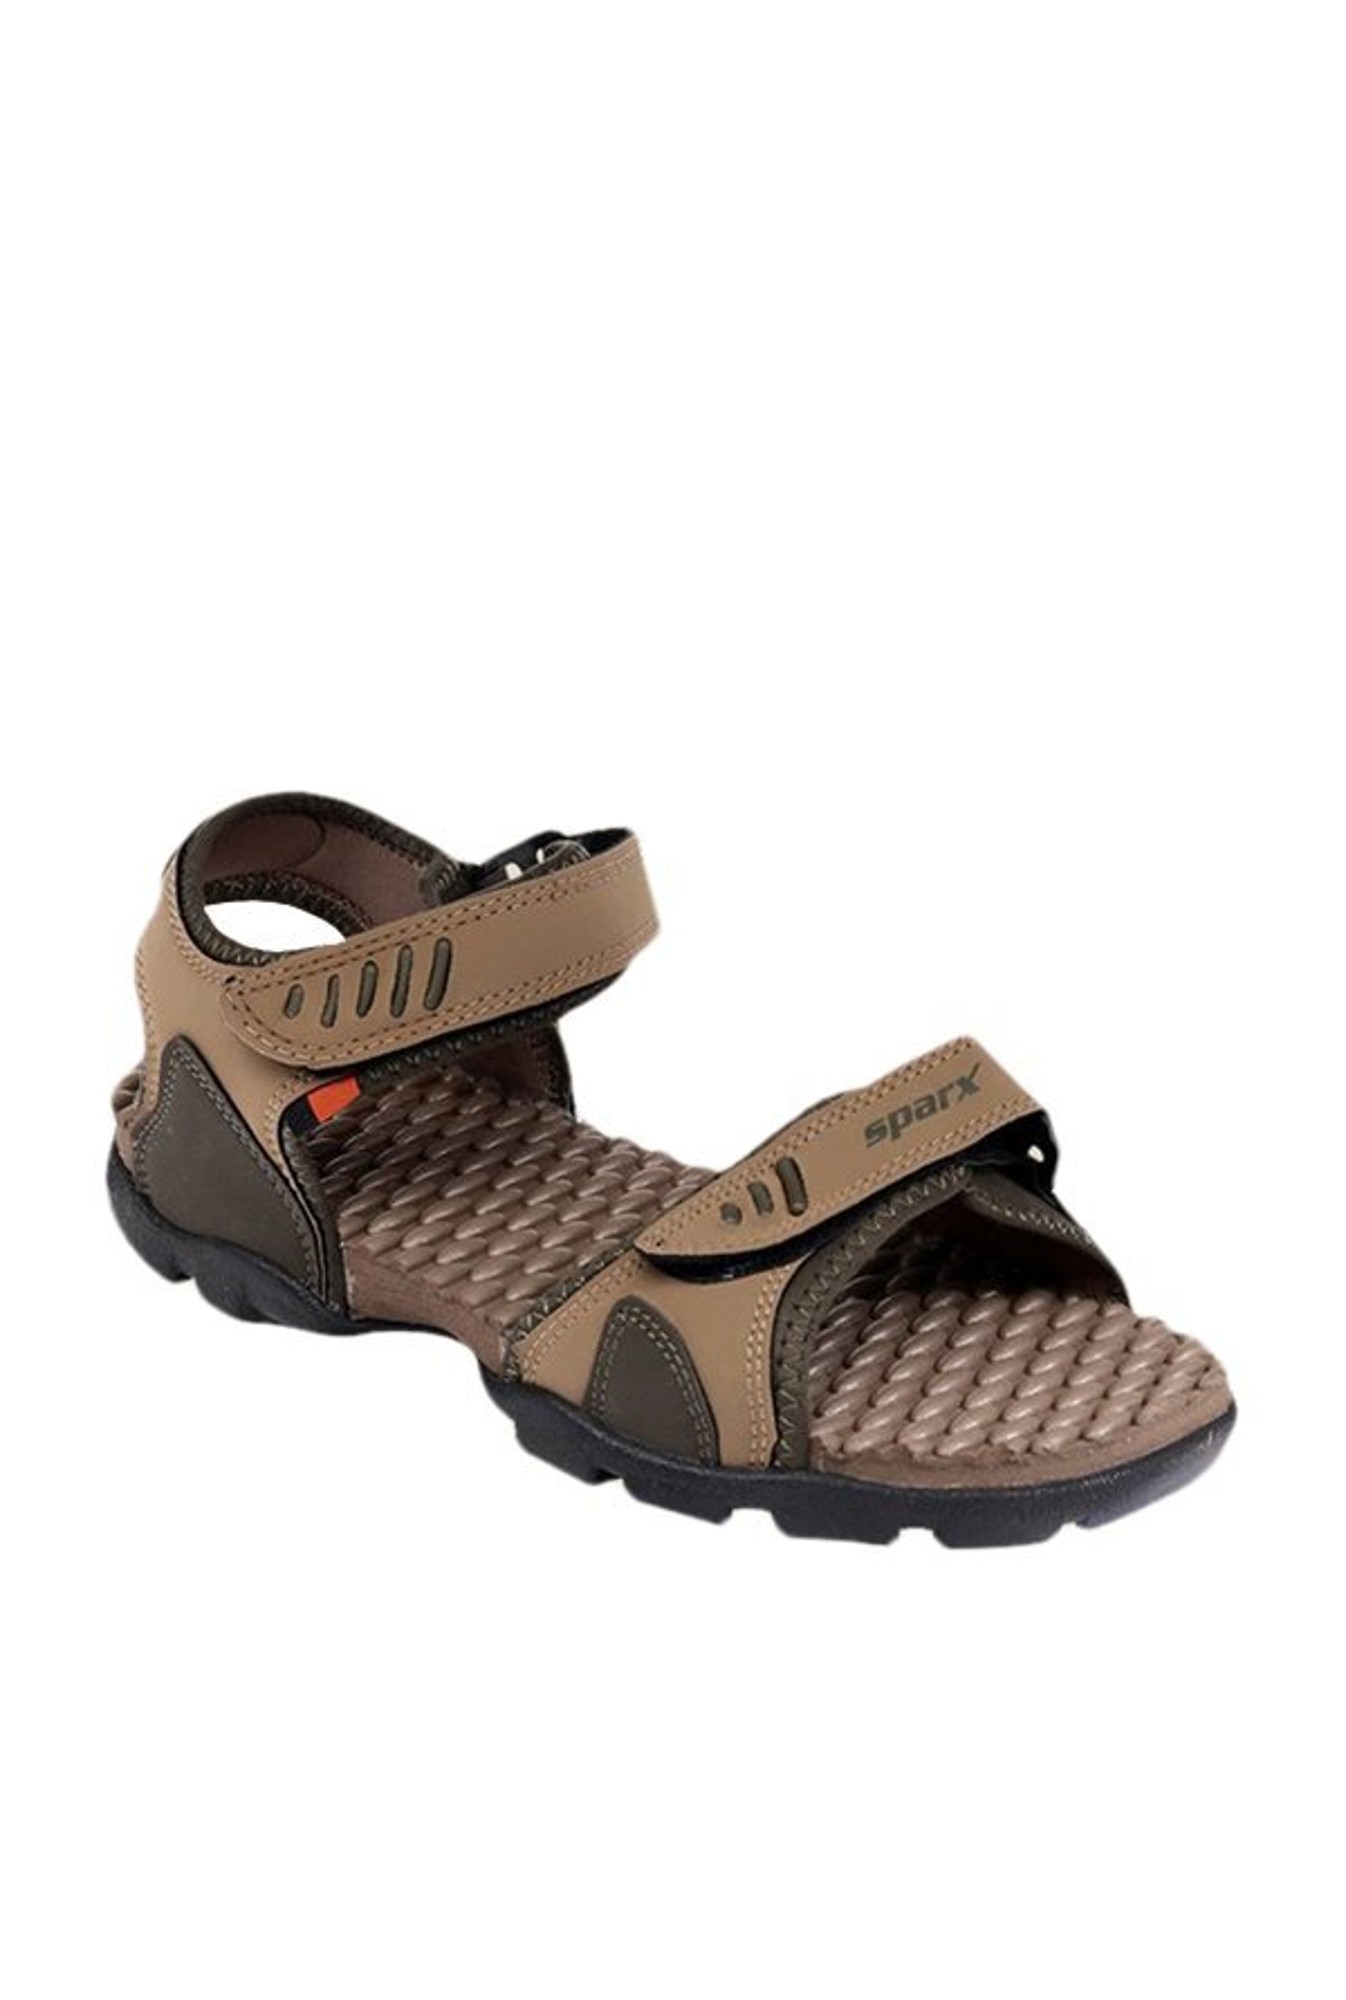 Sparx mens SS0492G CAMEL BROWN Sandal - 6 UK (SS0492G) : Amazon.in: Fashion